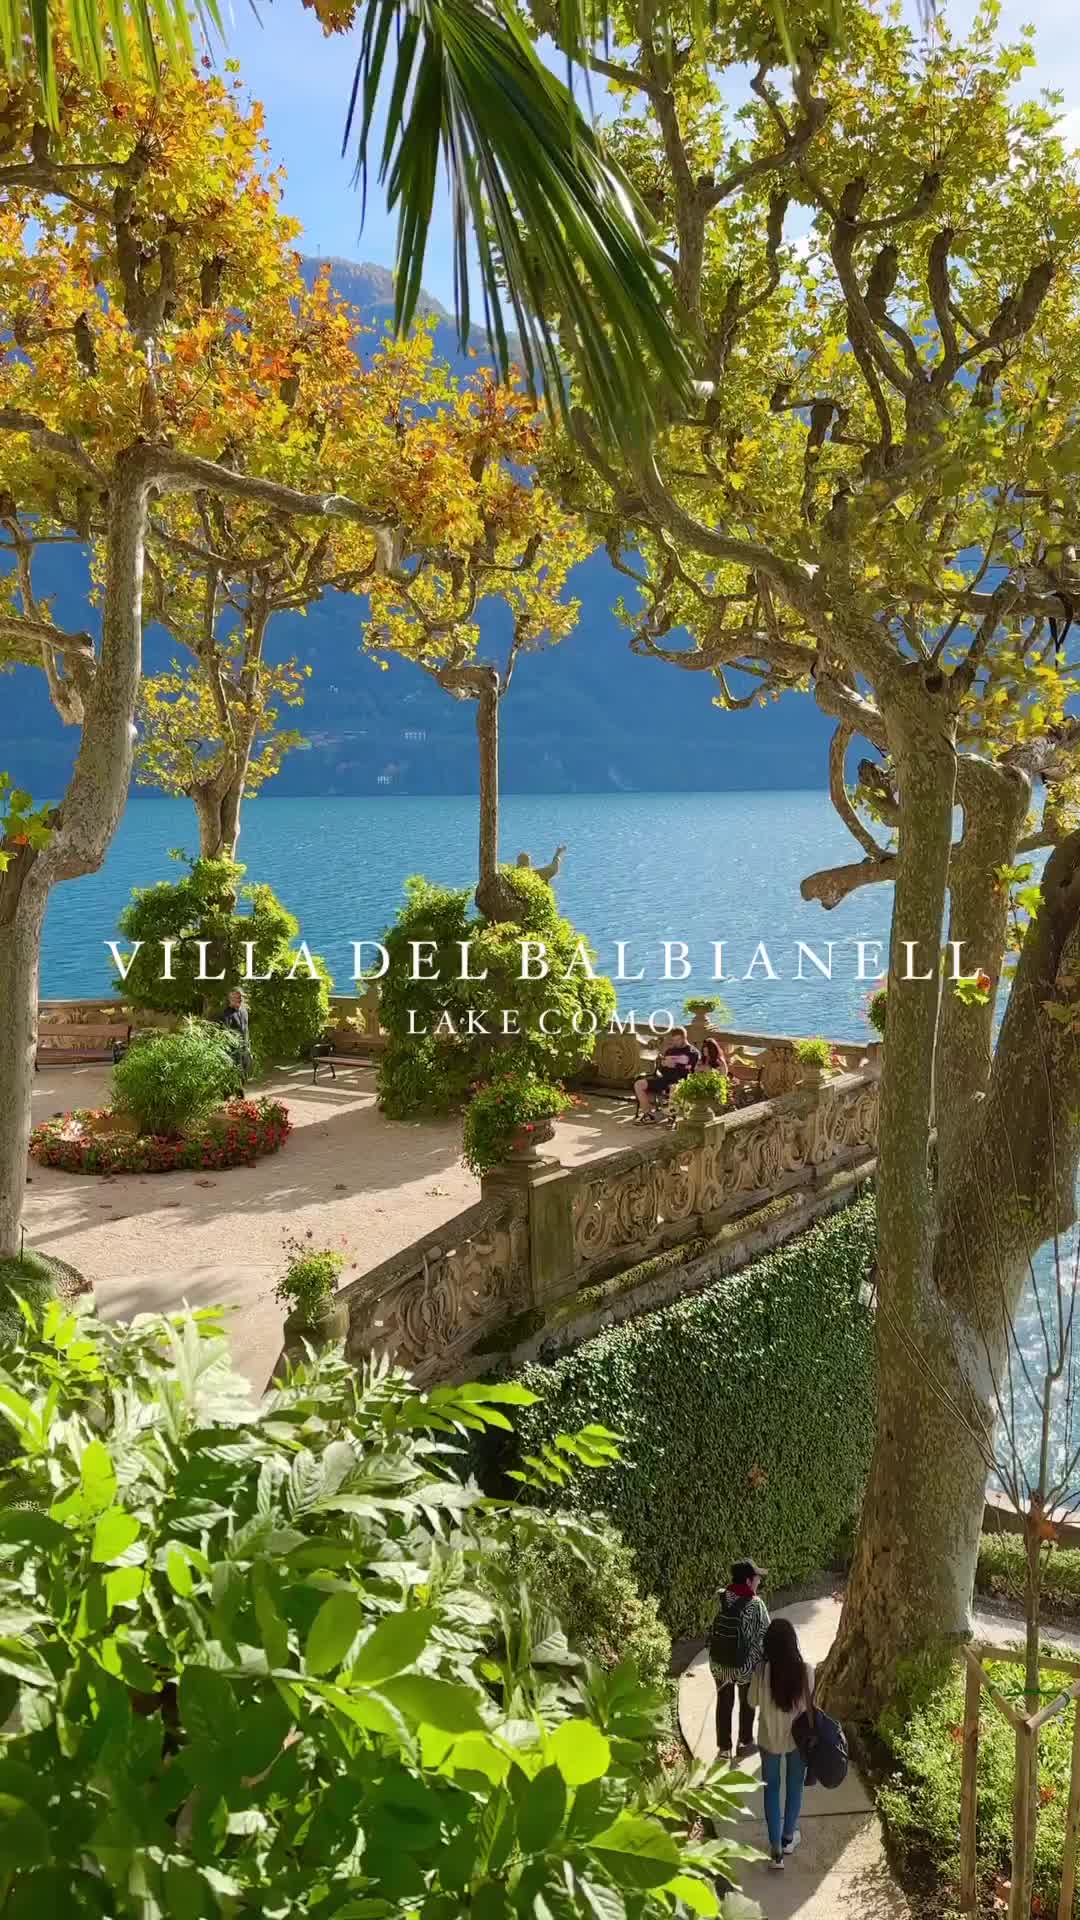 The dream ✨

#villadelbalbianello #lagodicomo #lakecomo #comolake #italia #italy